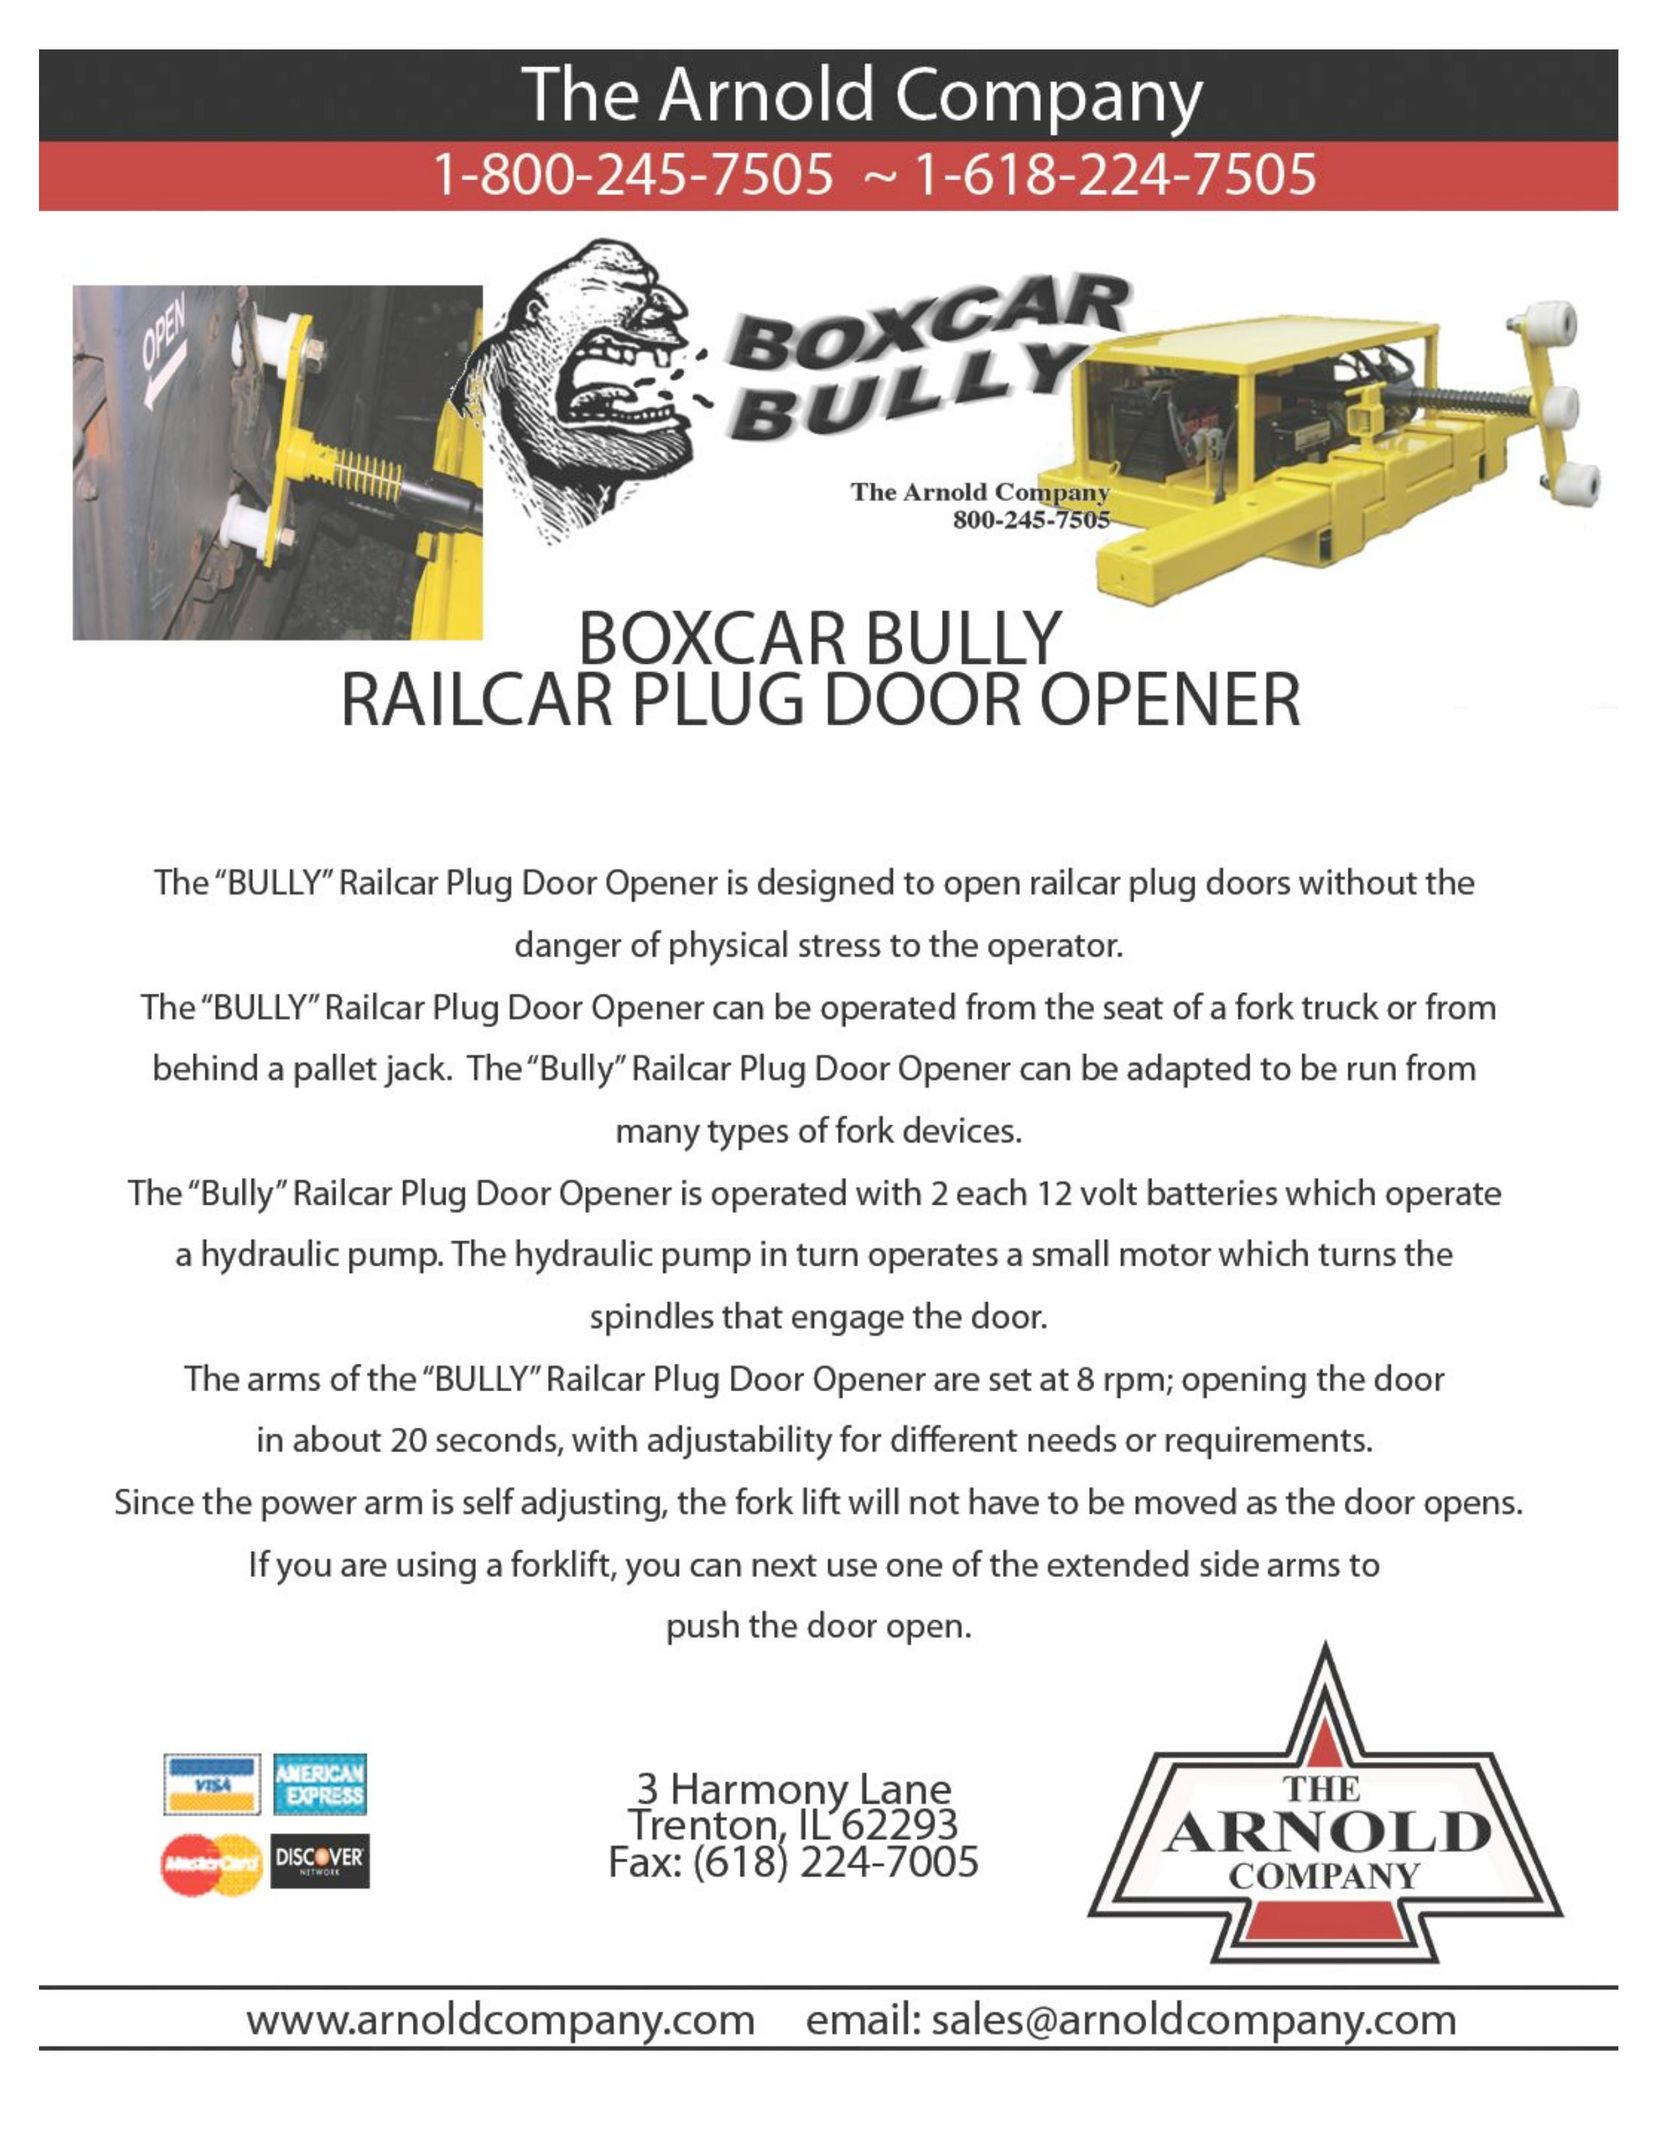 Arnold Company Boxcar Bully Railcar Plug Door Opener Garage Door Opener User Manual (Page 1)